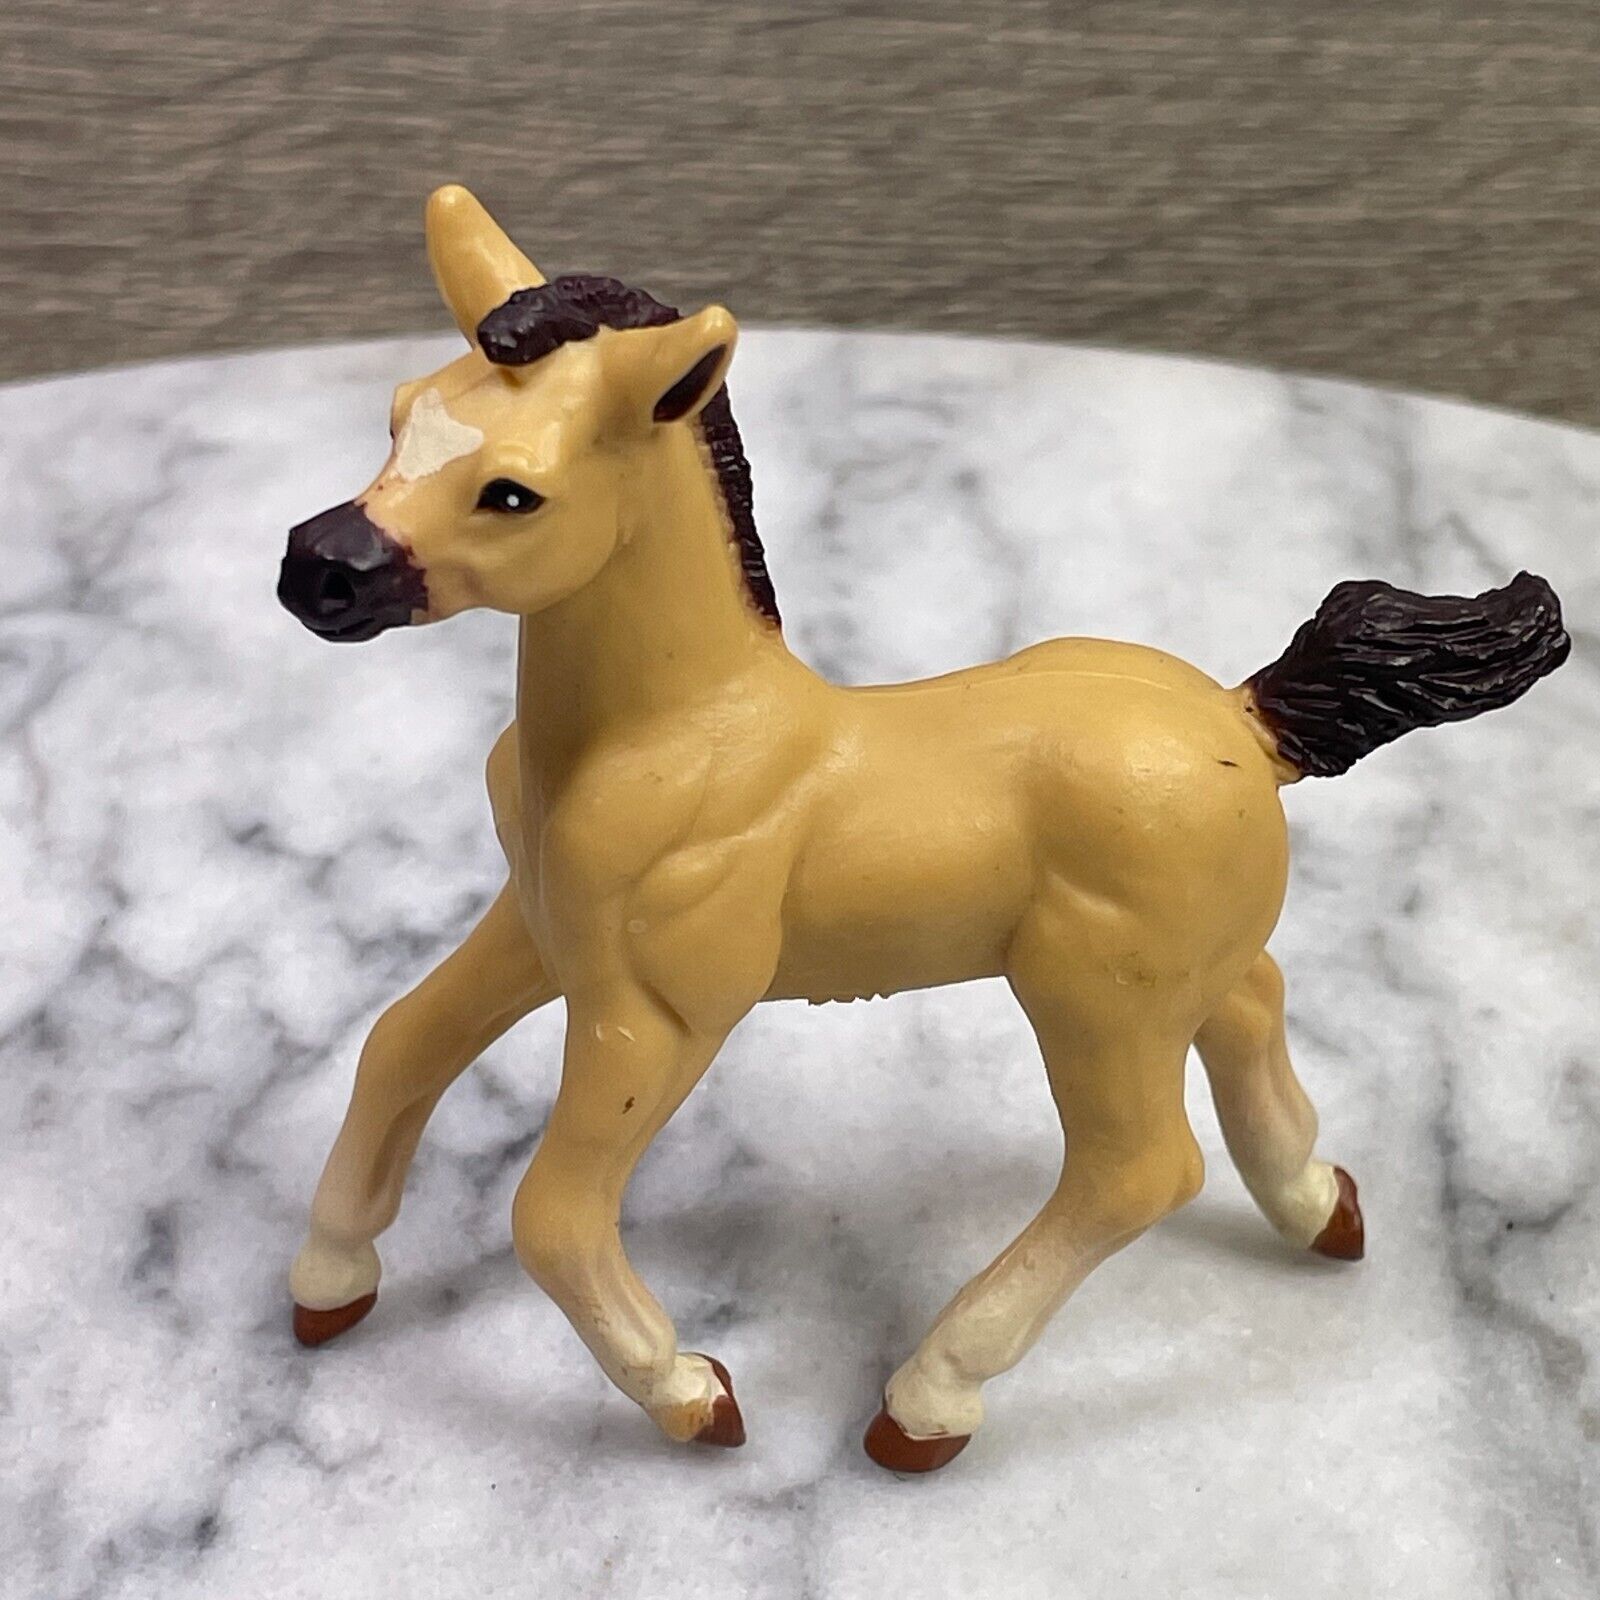 VTG Safari Ltd Foal Horse Toy Beige Figurine Collector 1997 90s Retro Fun Cute